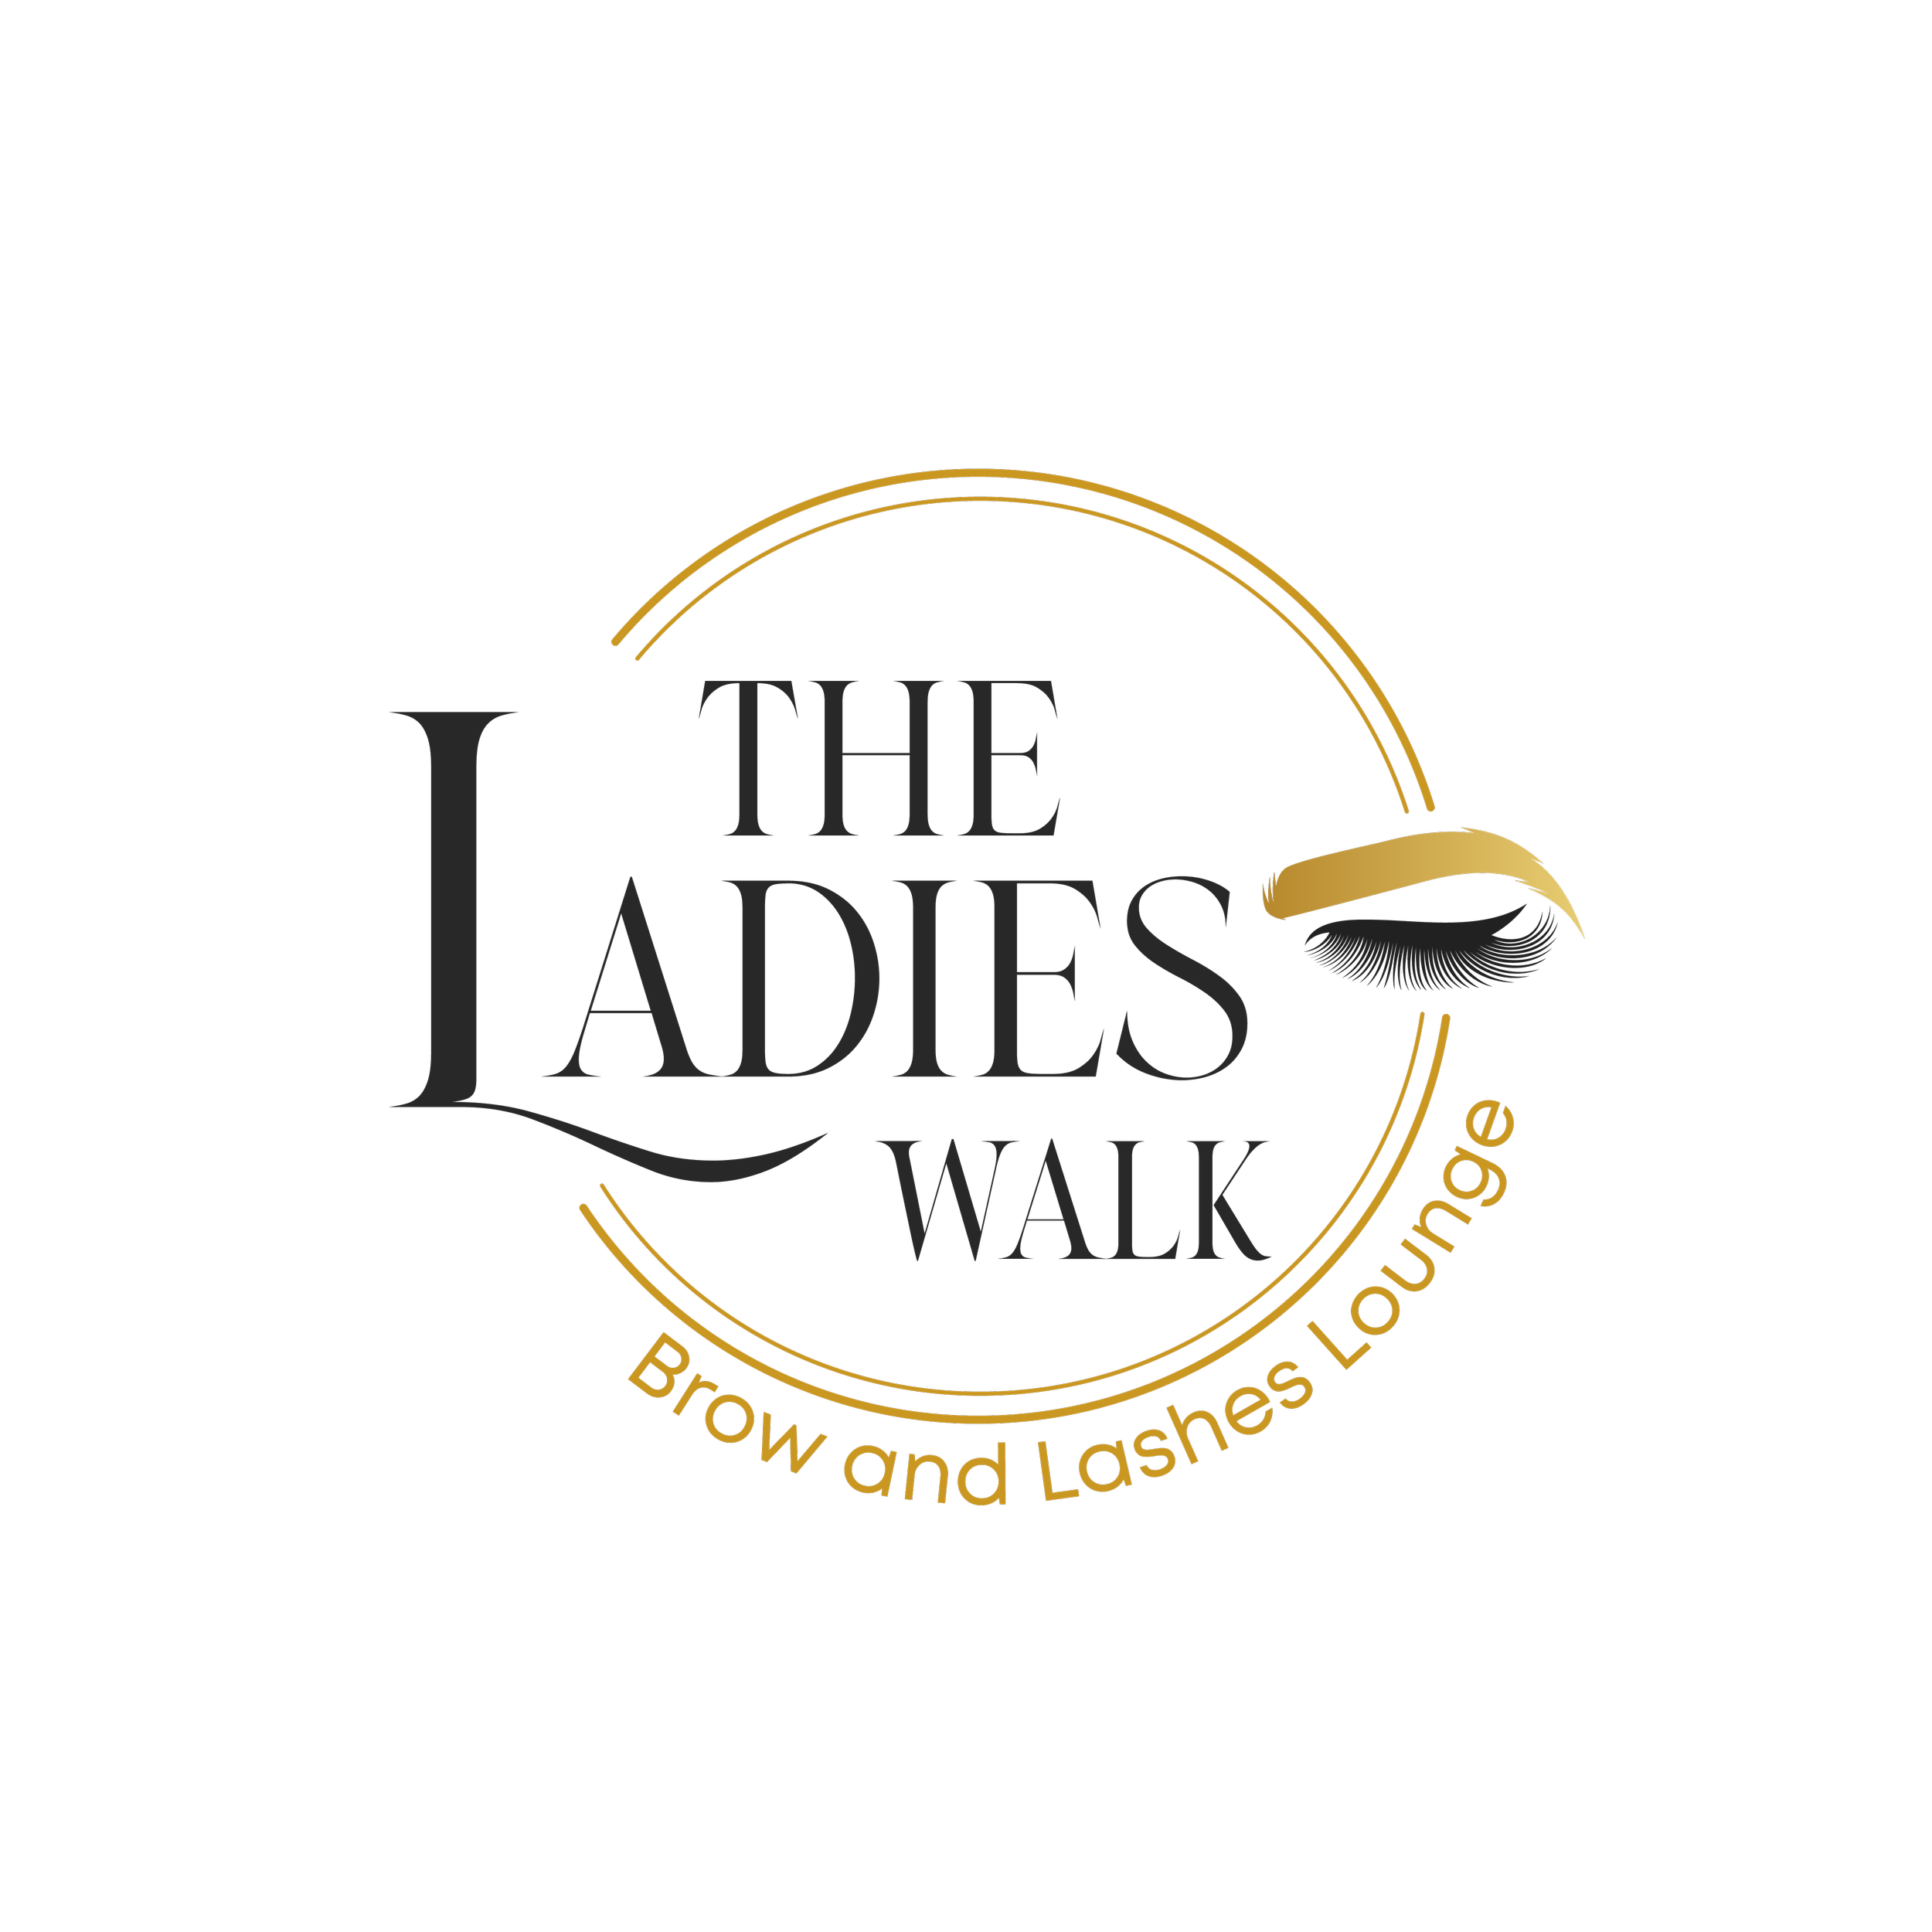 The Ladies Walk